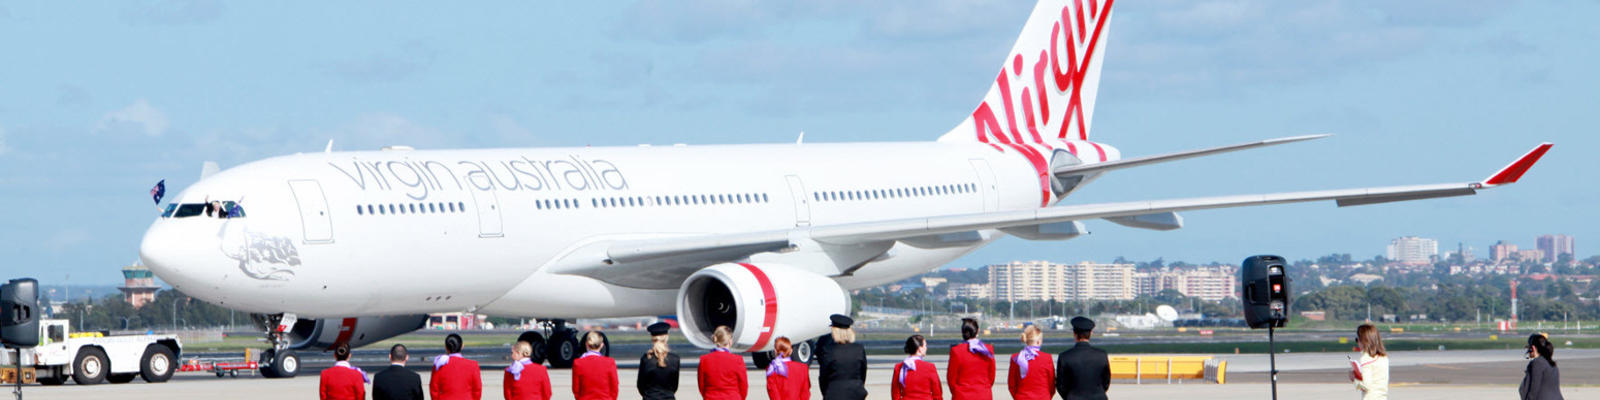 Virgin crew members standing on a red carpet looking at one of Virgin Australia's planes